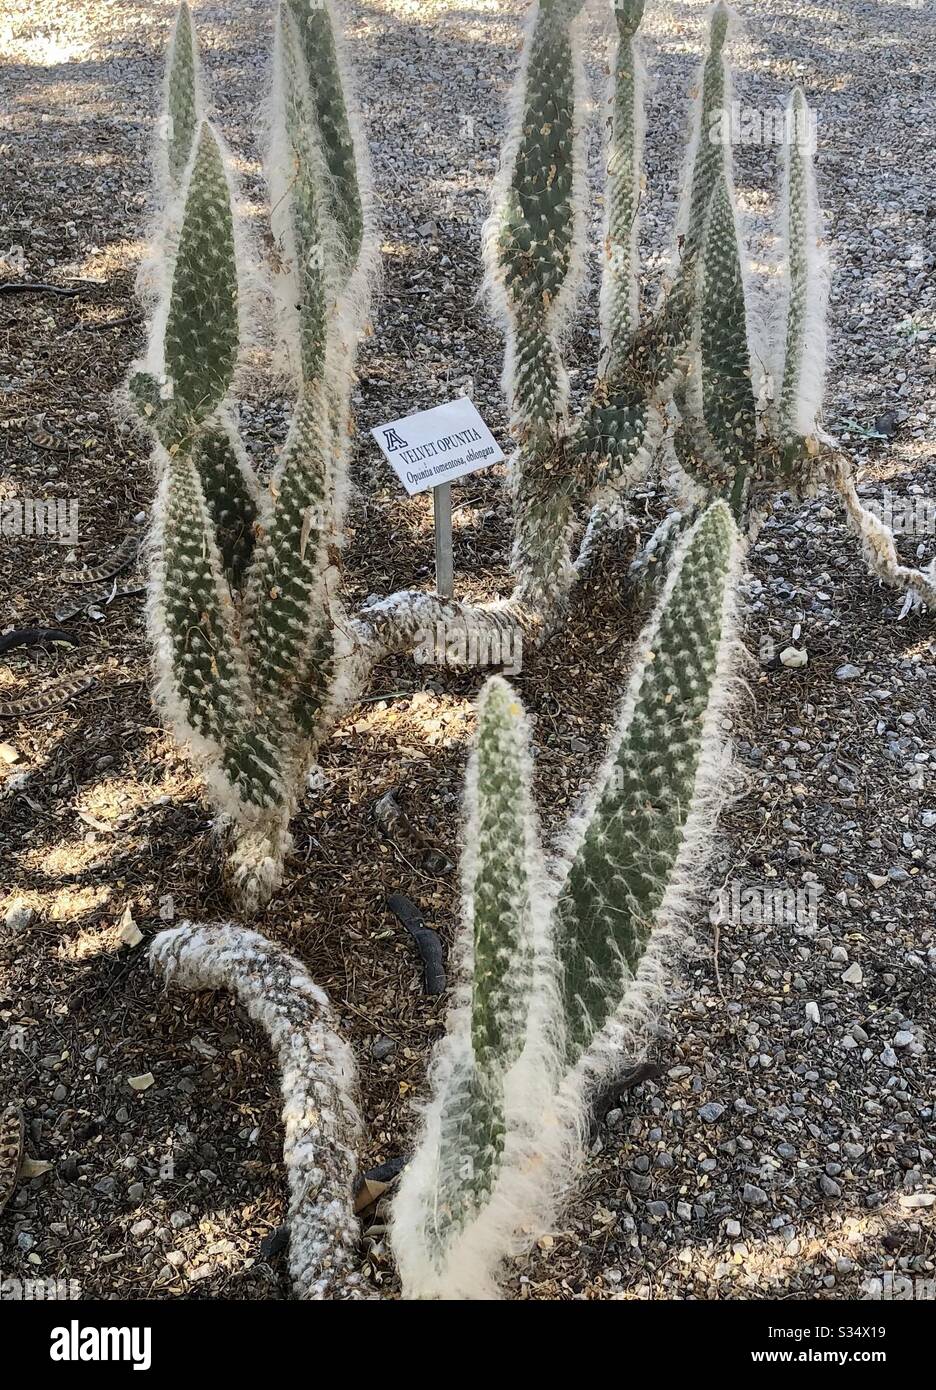 Velvet Opuntia, cactus, pianta del deserto, texture, natura, naturale,  scena giardino pubblico, ombre Foto stock - Alamy